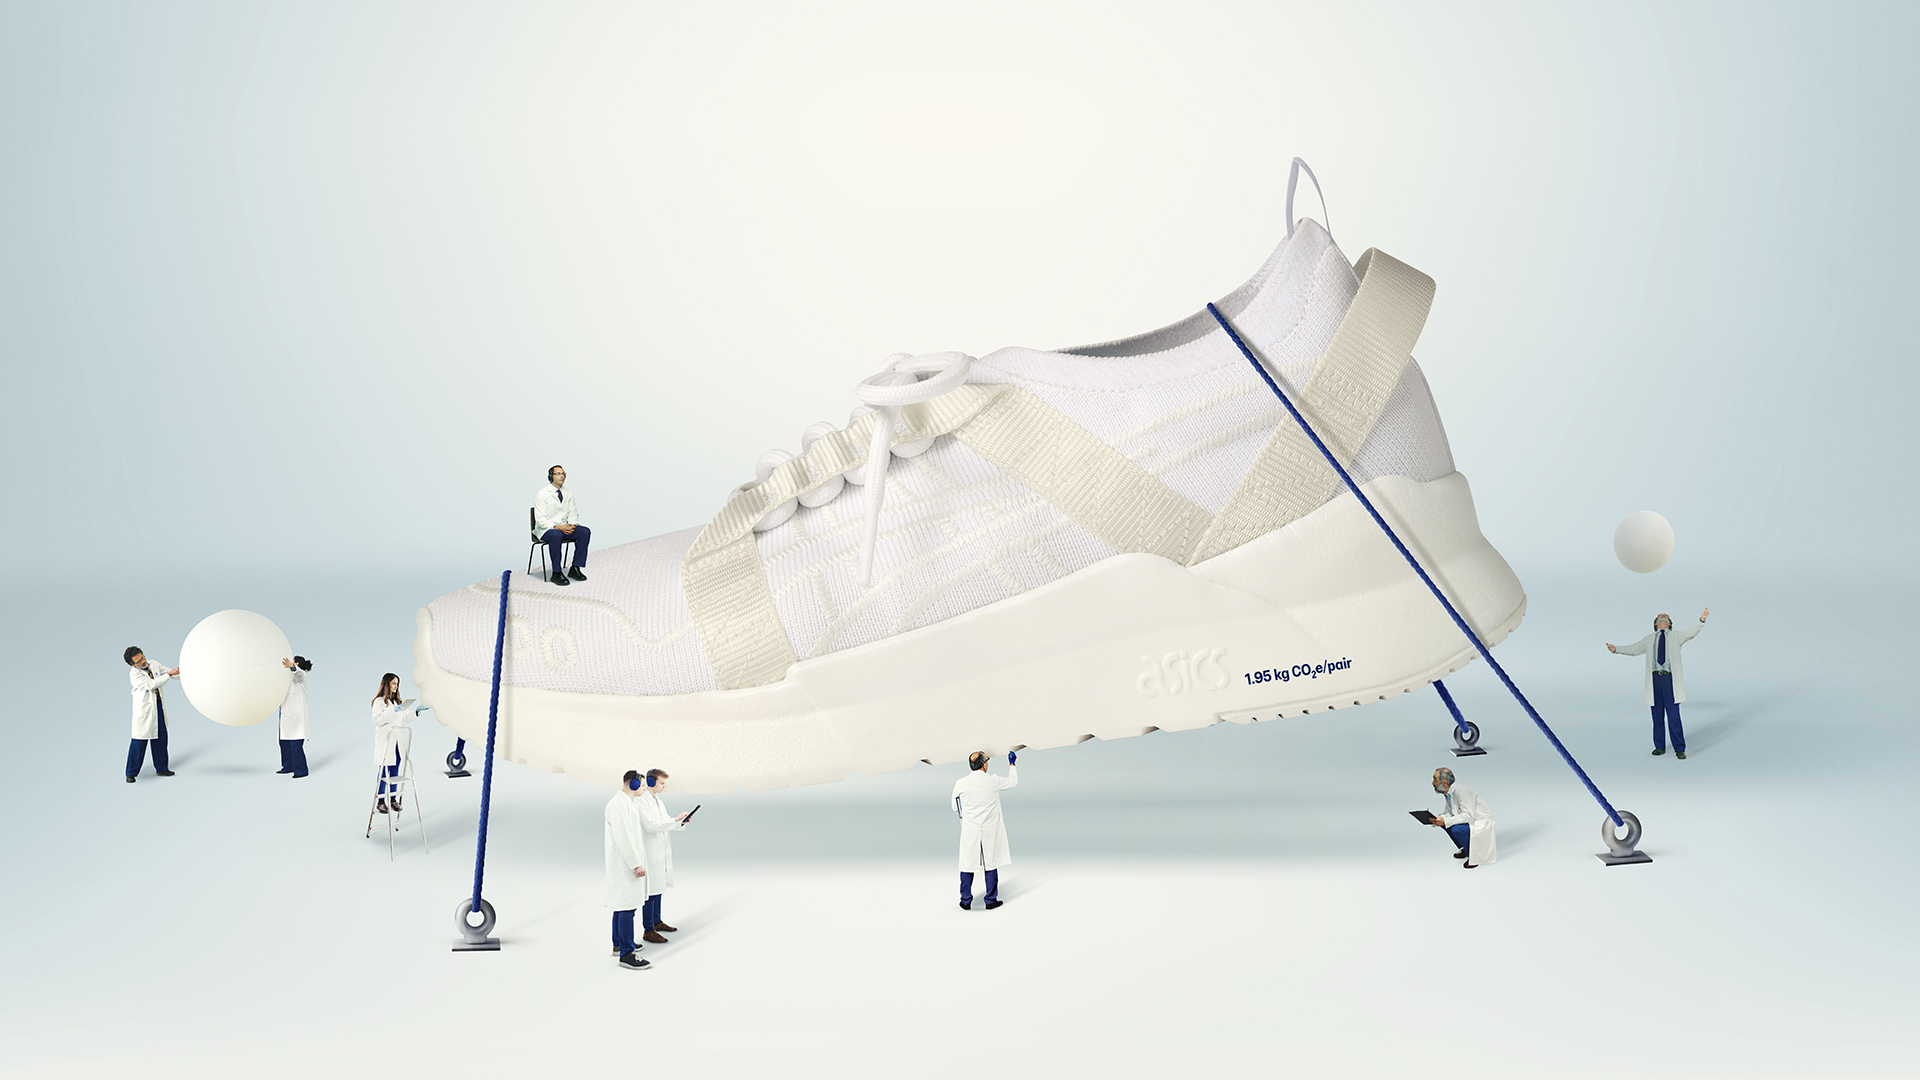 Image for ASICS Unveils Lightest Ever CO2E Emissions Sneaker1, Emitting Just 1.95kg Per Pair